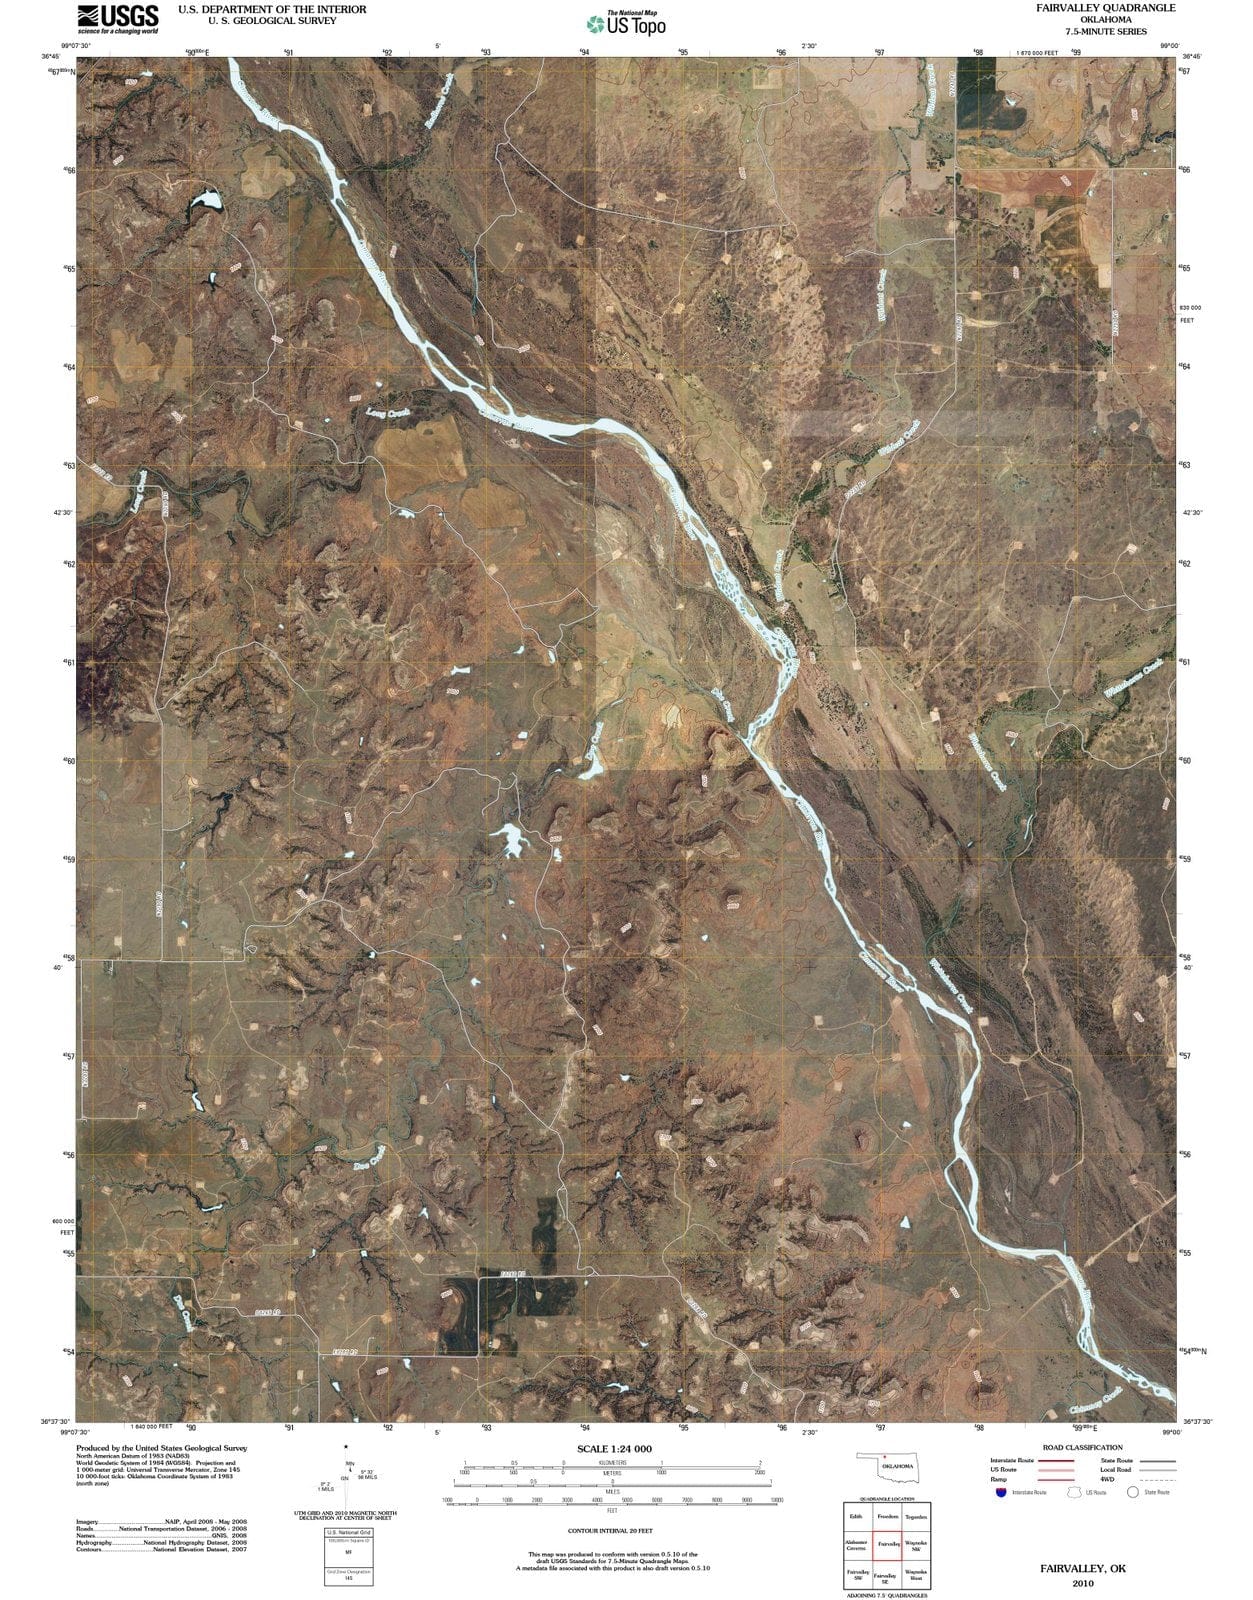 2010 Fairvalley, OK - Oklahoma - USGS Topographic Map